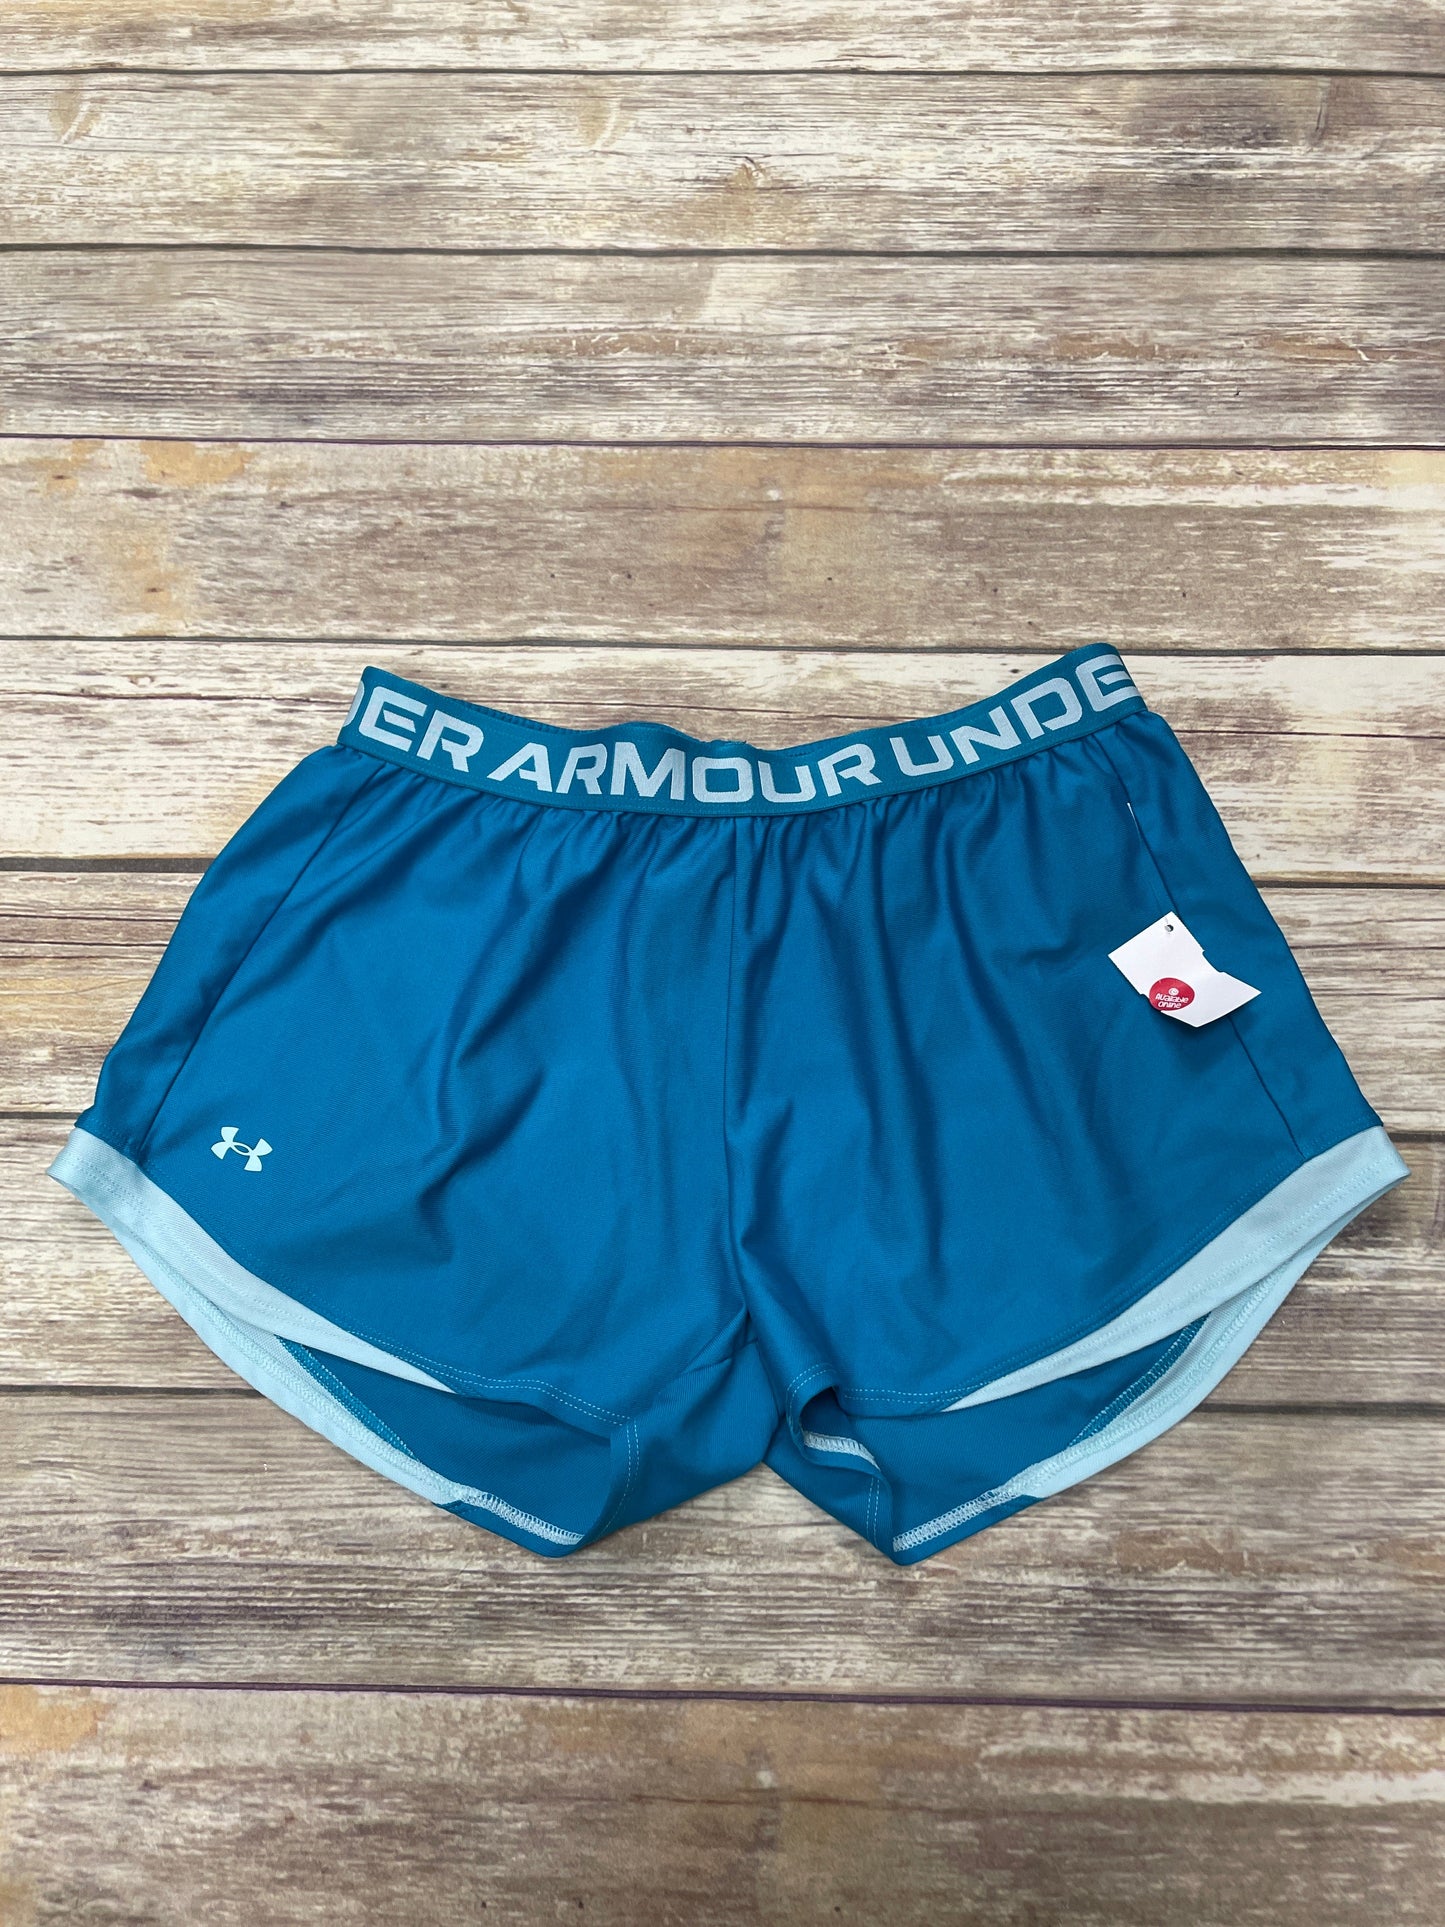 Blue Athletic Shorts Under Armour, Size L